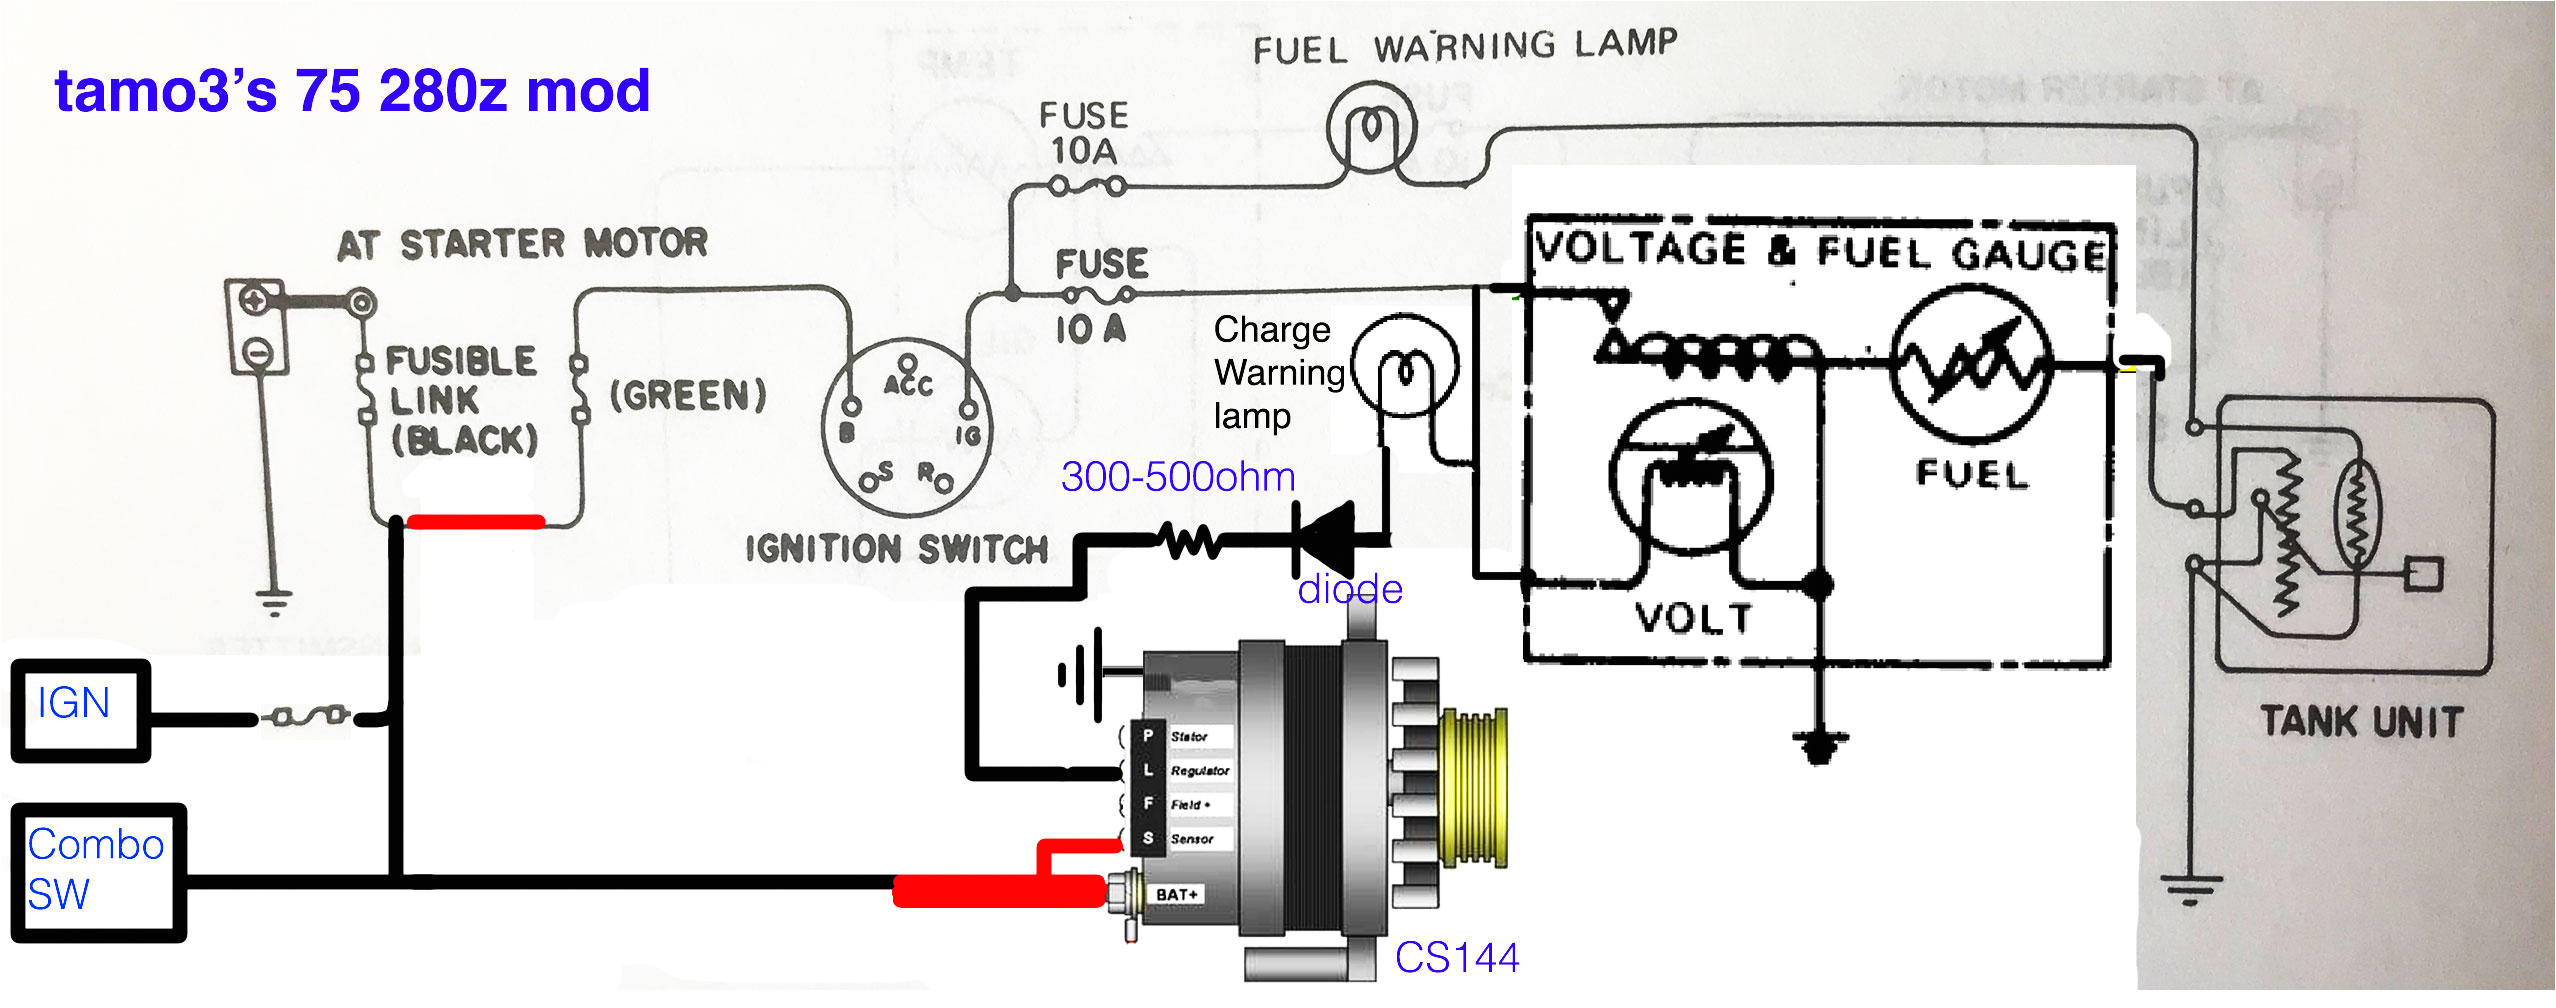 cs144 wiring diagram at mod 75 ammeter thumb jpg c68d5a3e3d21ec35f89e90b18fffd8ef jpg